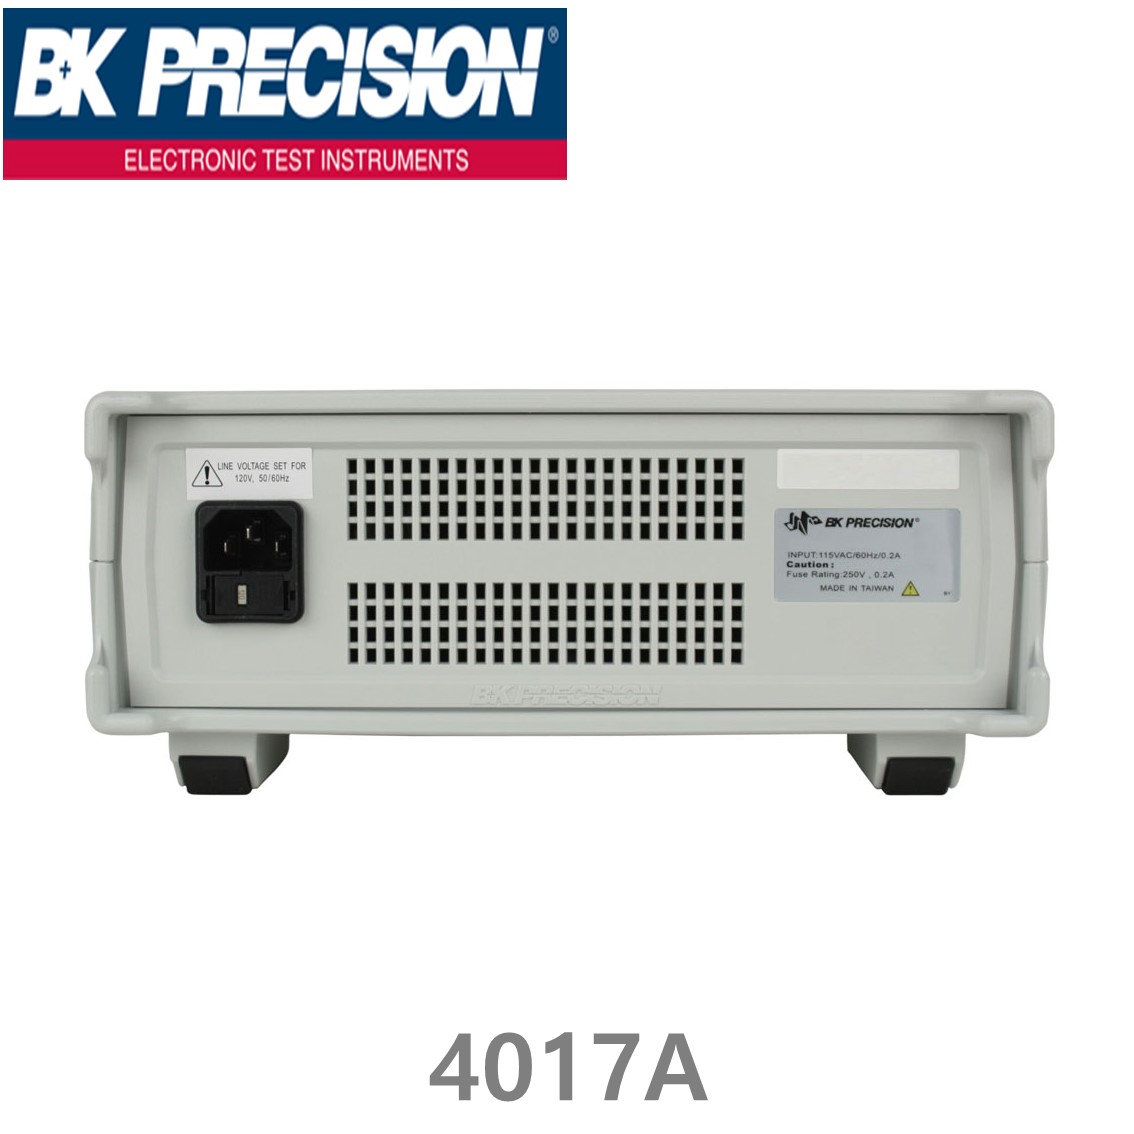 [ BK PRECISION ] BK 4017A, 10MHz, Sweep Function Generator, 스윕 펑션제너레이터, 함수발생기, B&K 4017A